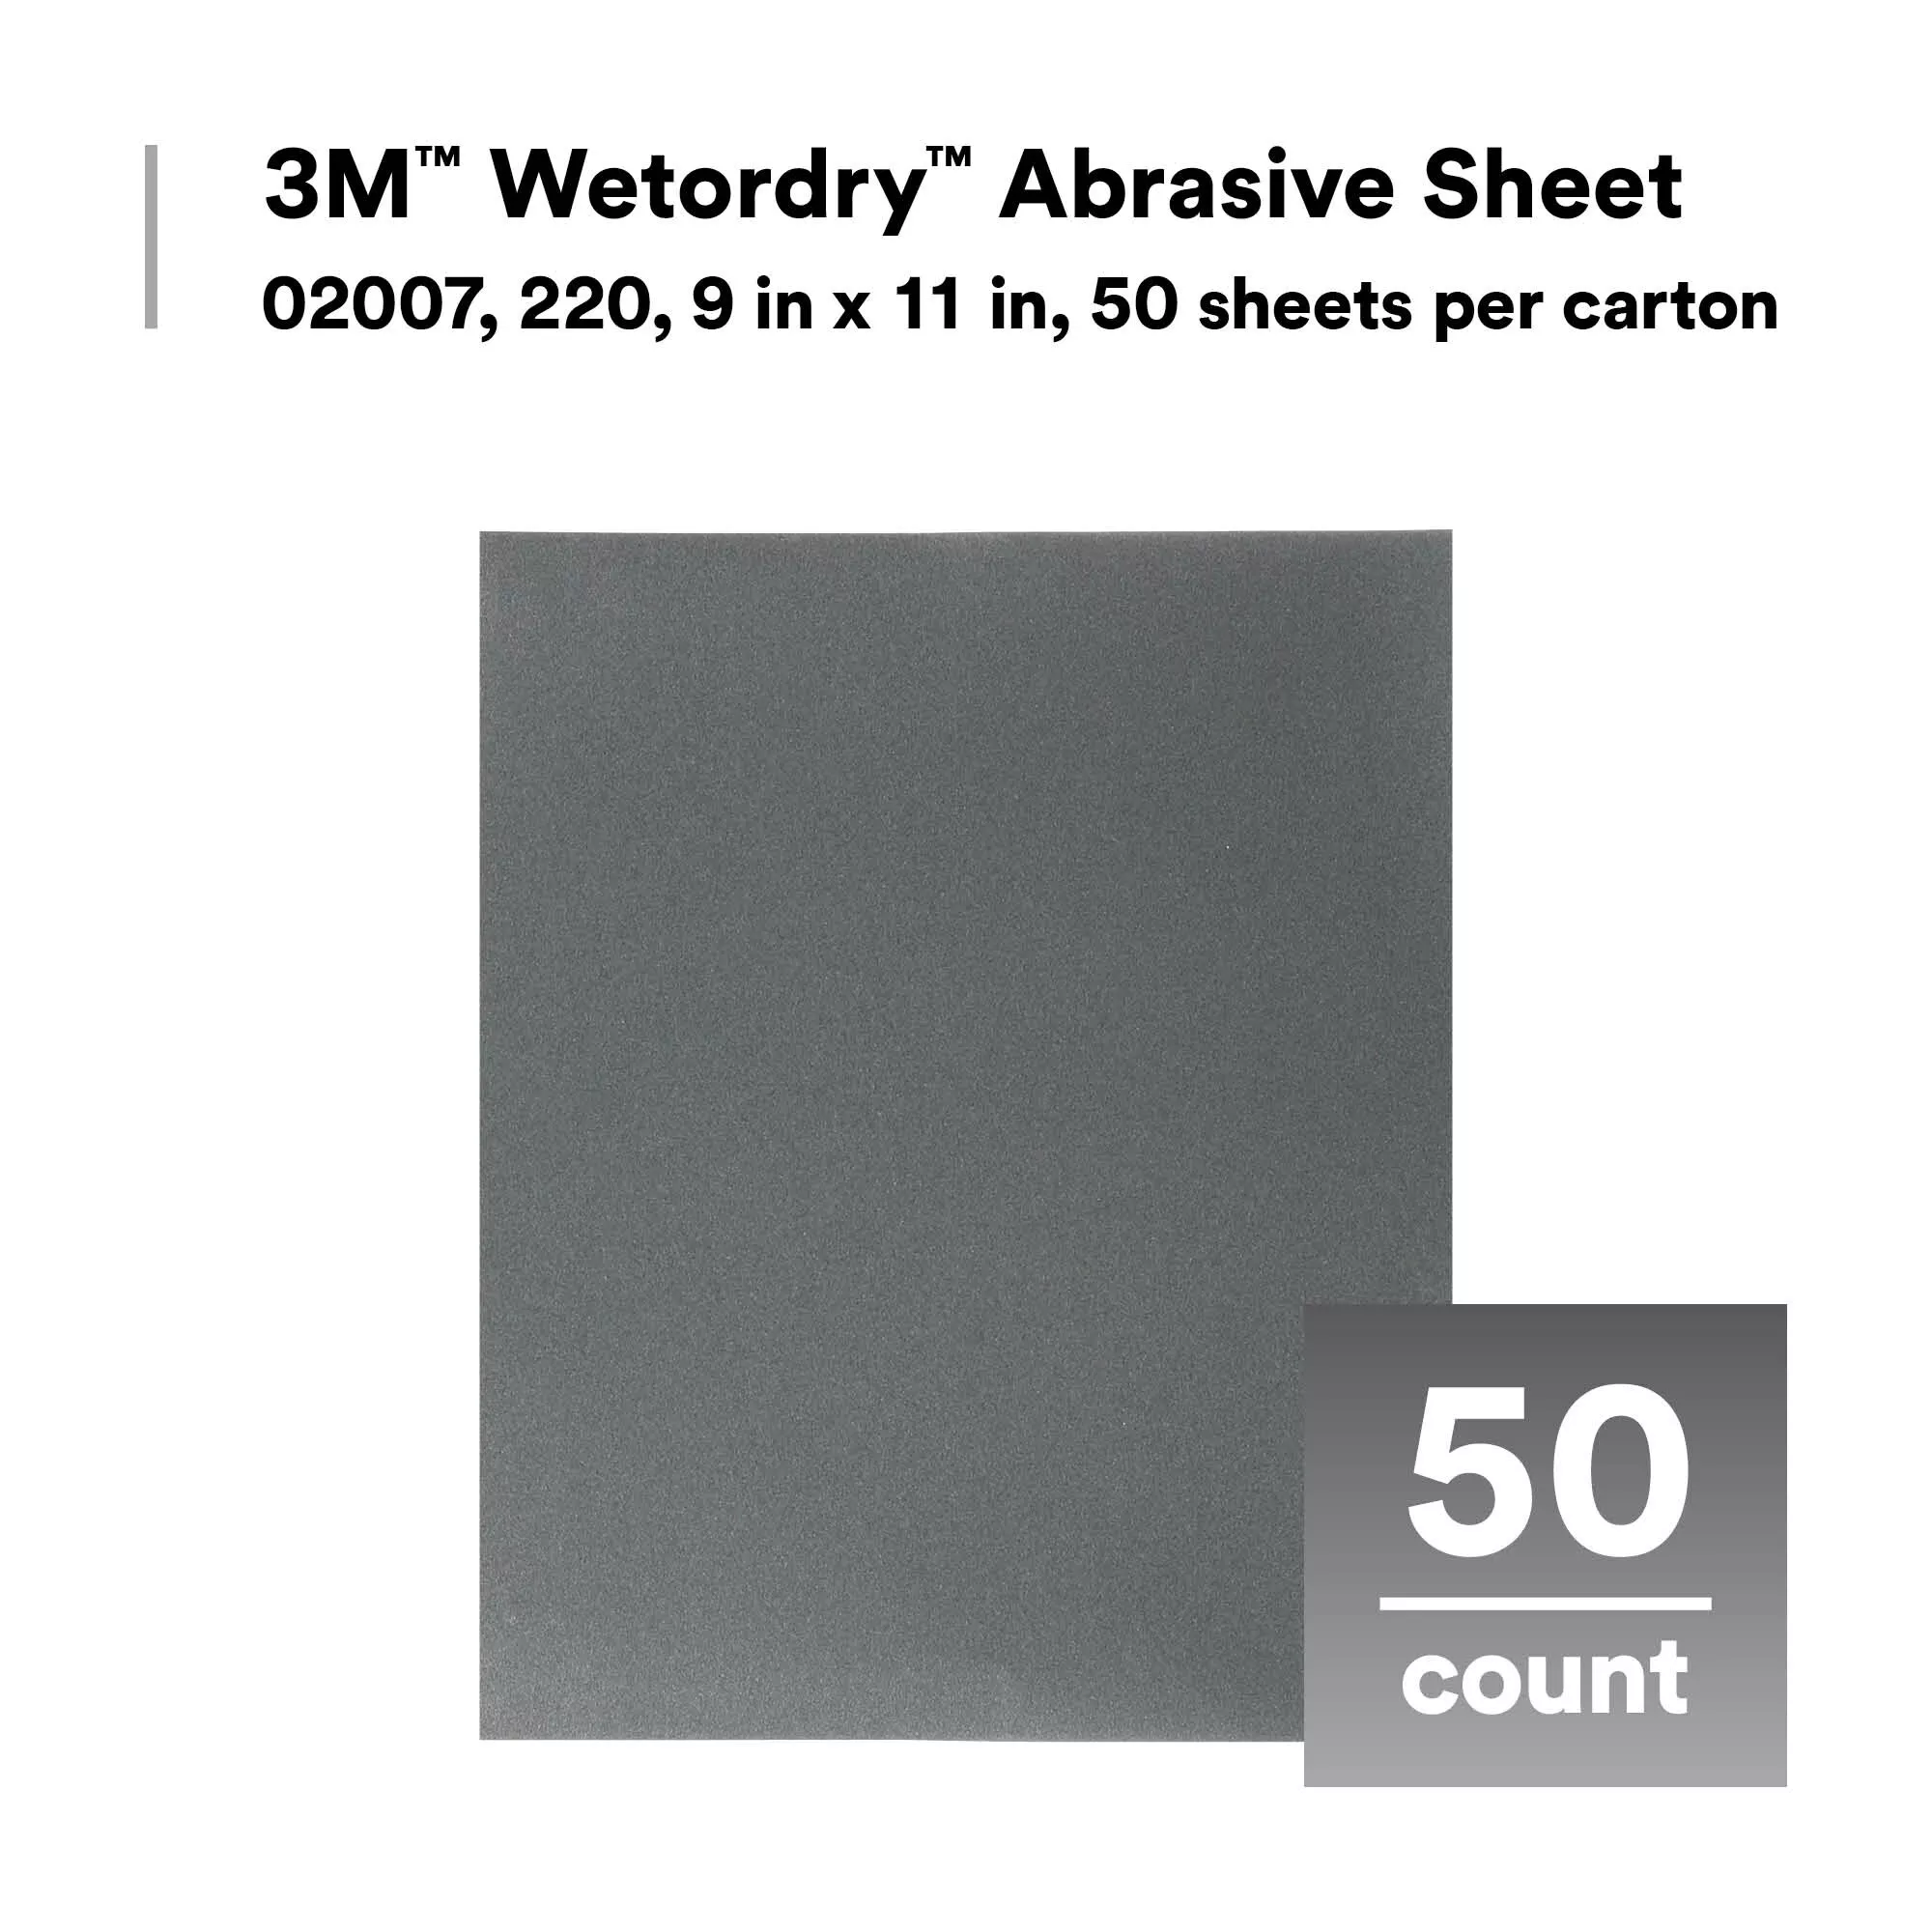 SKU 7000148224 | 3M™ Wetordry™ Abrasive Sheet 413Q